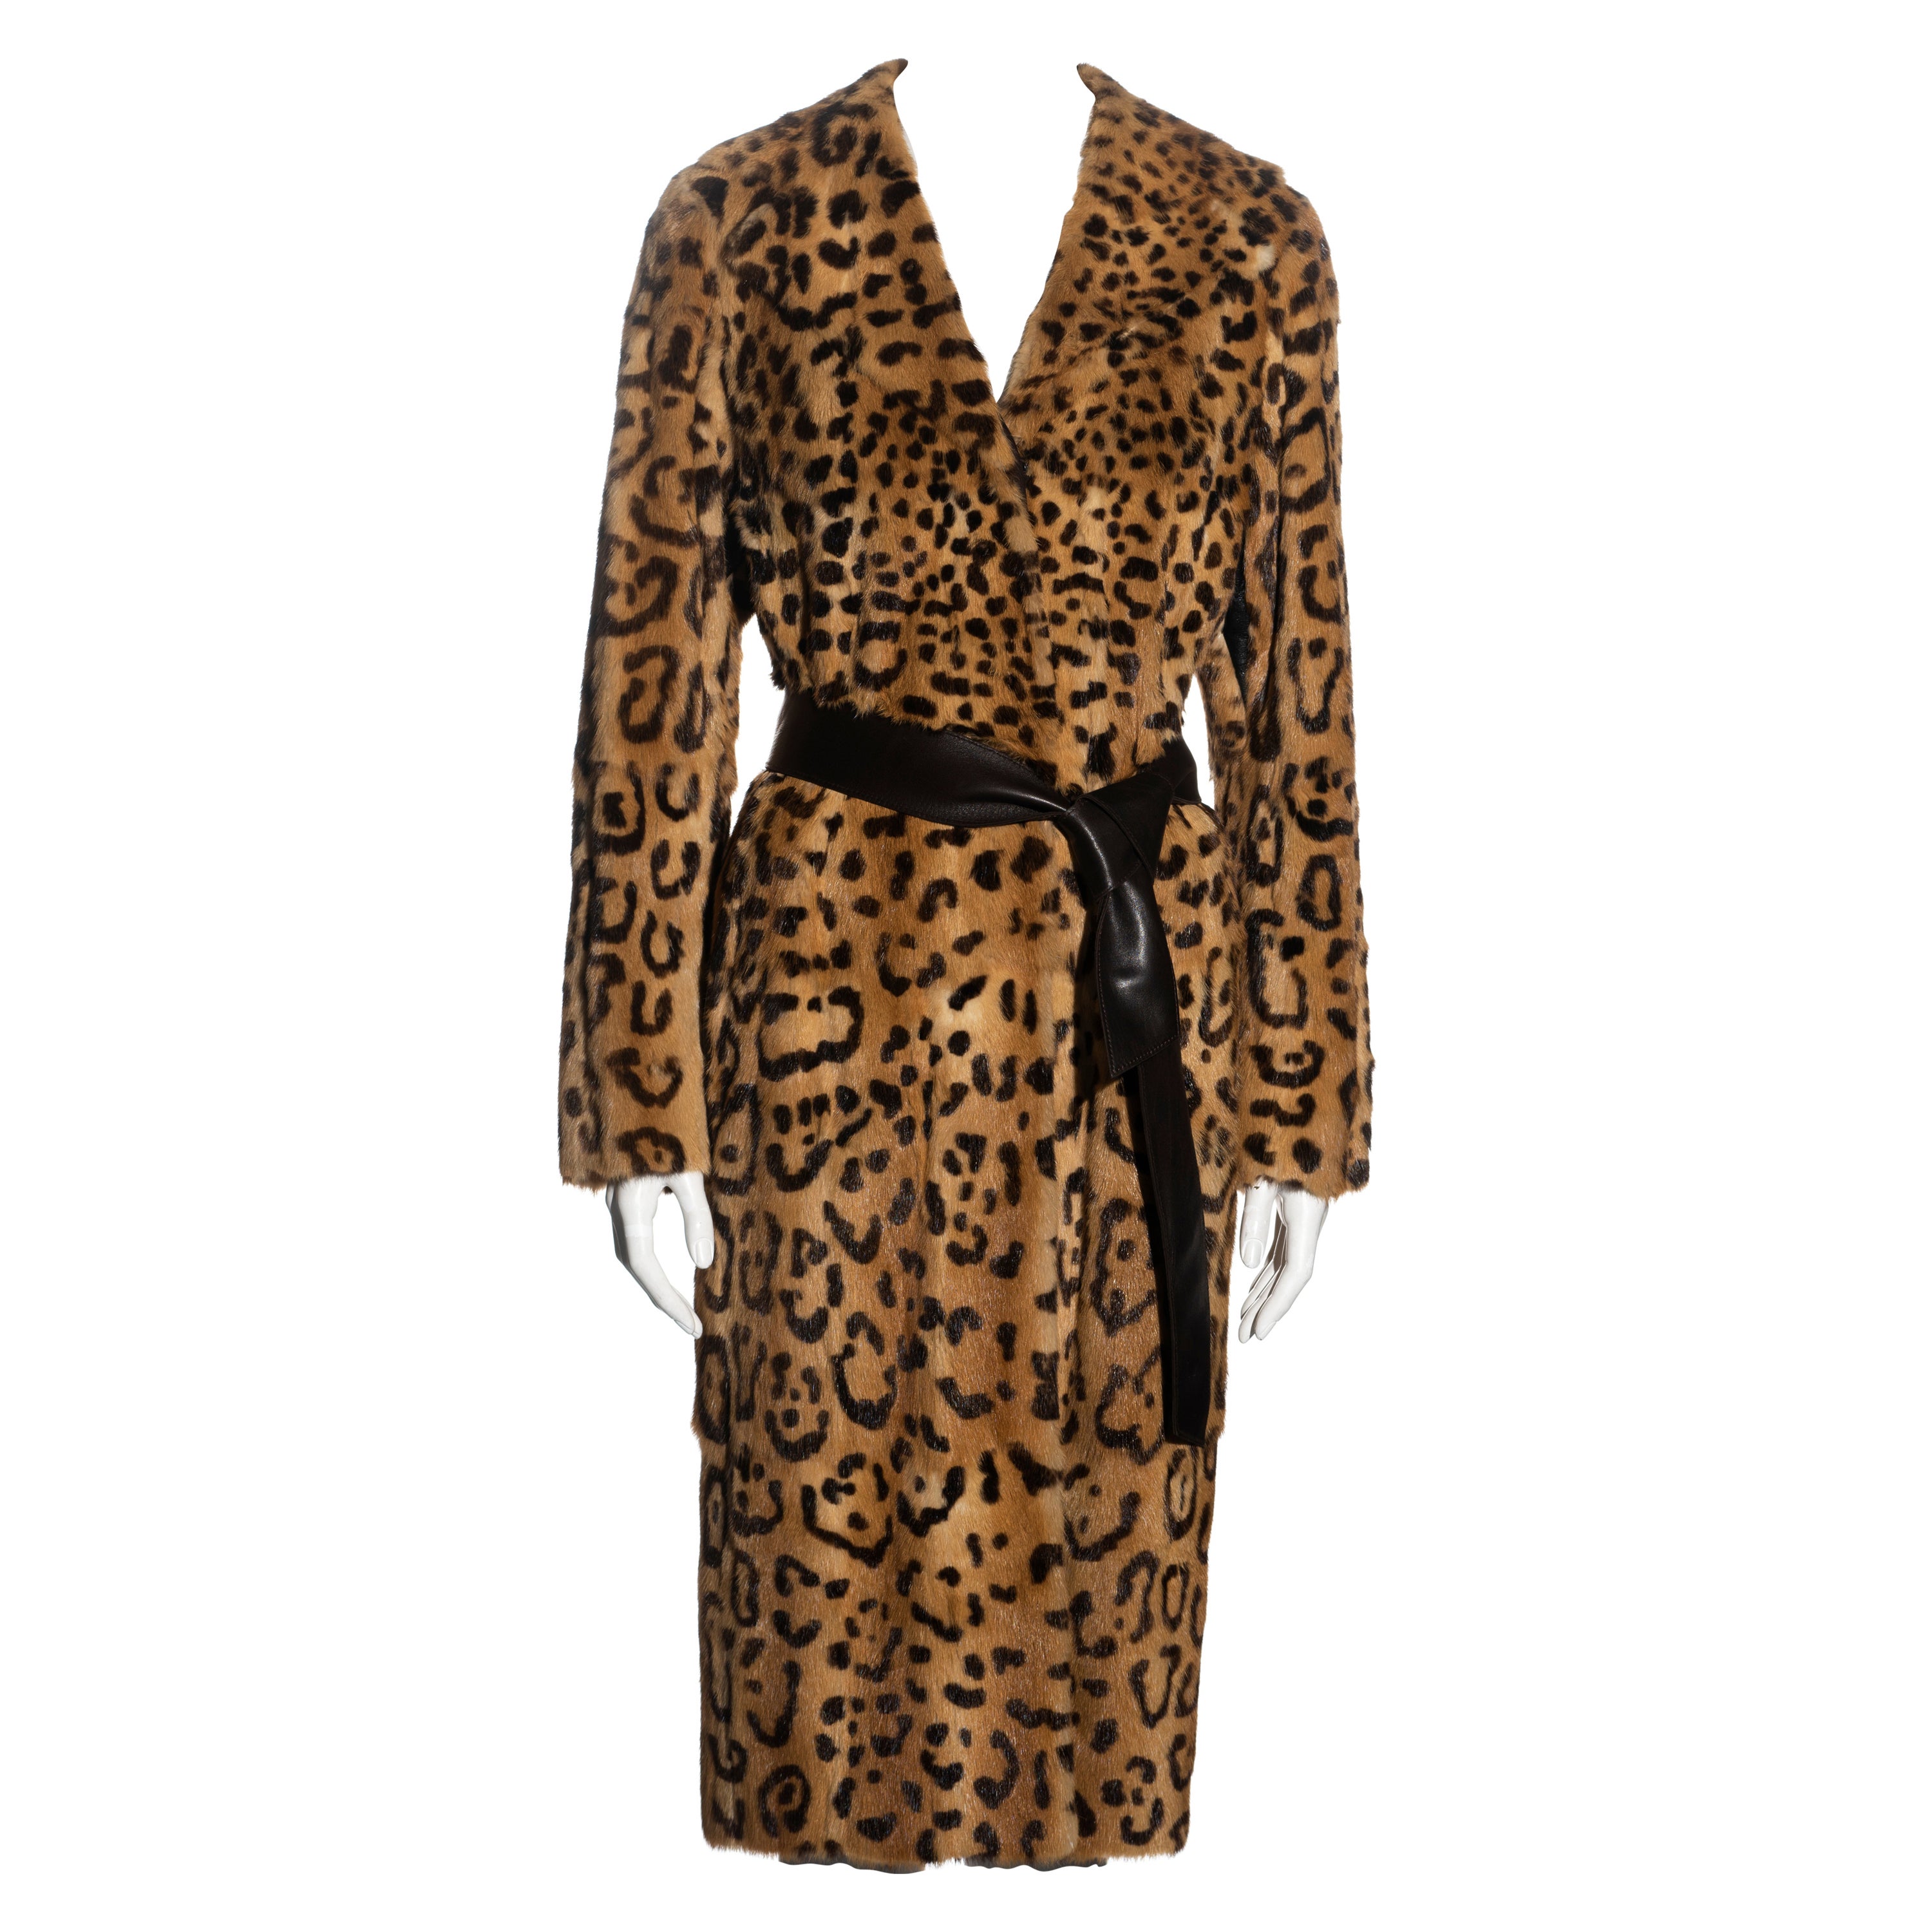 Dolce & Gabbana leopard print rabbit fur coat, fw 2000